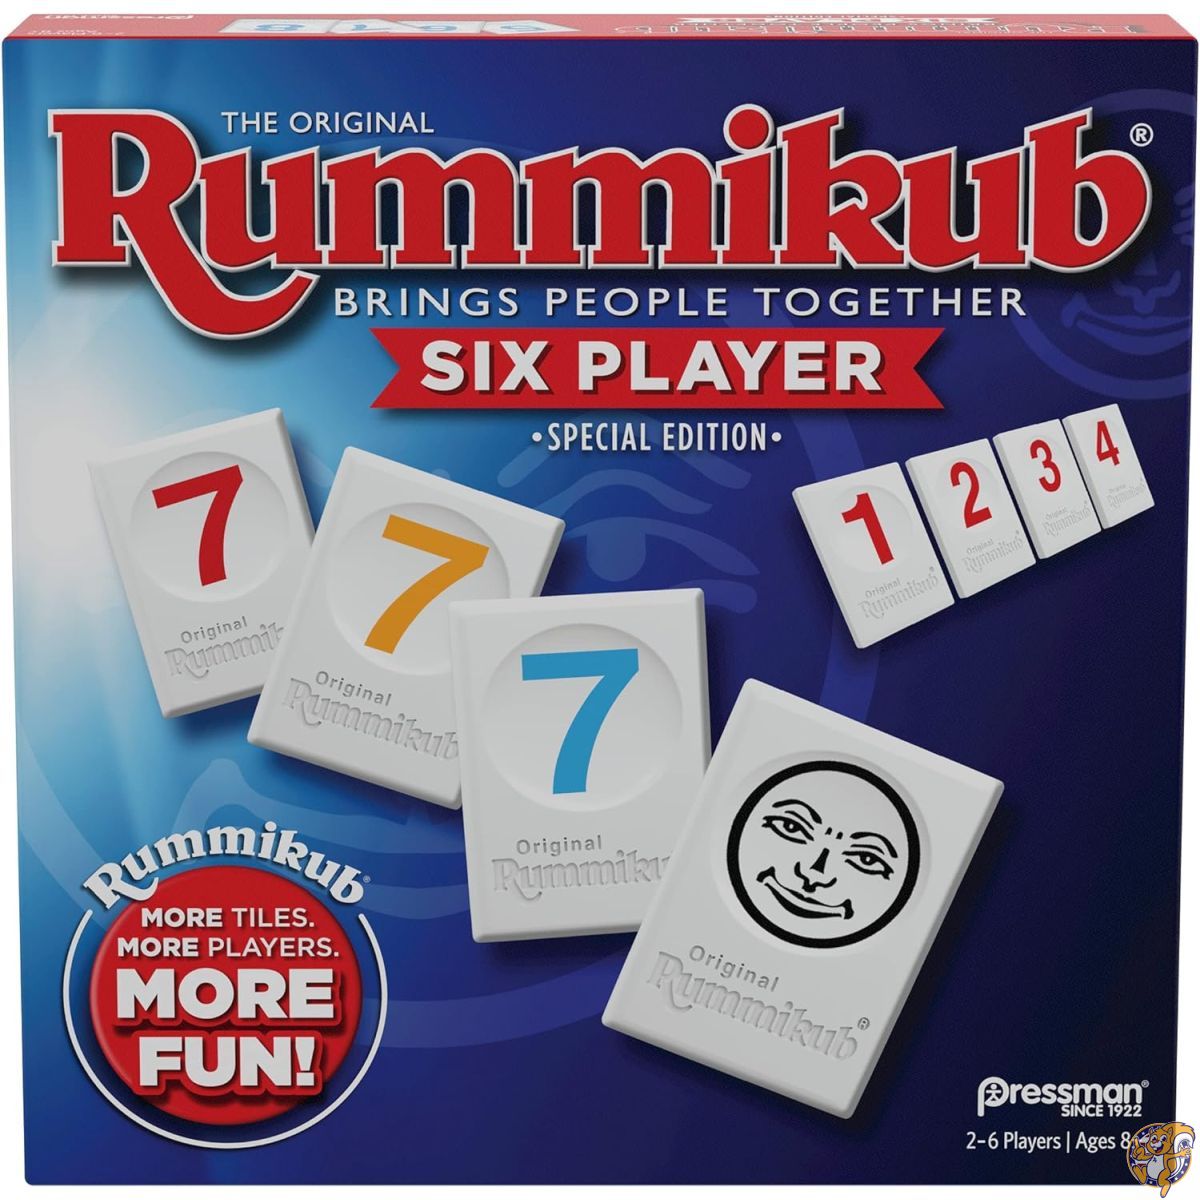 Pressman (プレスマン) ラミーキューブ 6人版 - クラシック ラミータイルゲーム より多くのタイルで大人数でプレイすればさらに楽しい！ ブルー